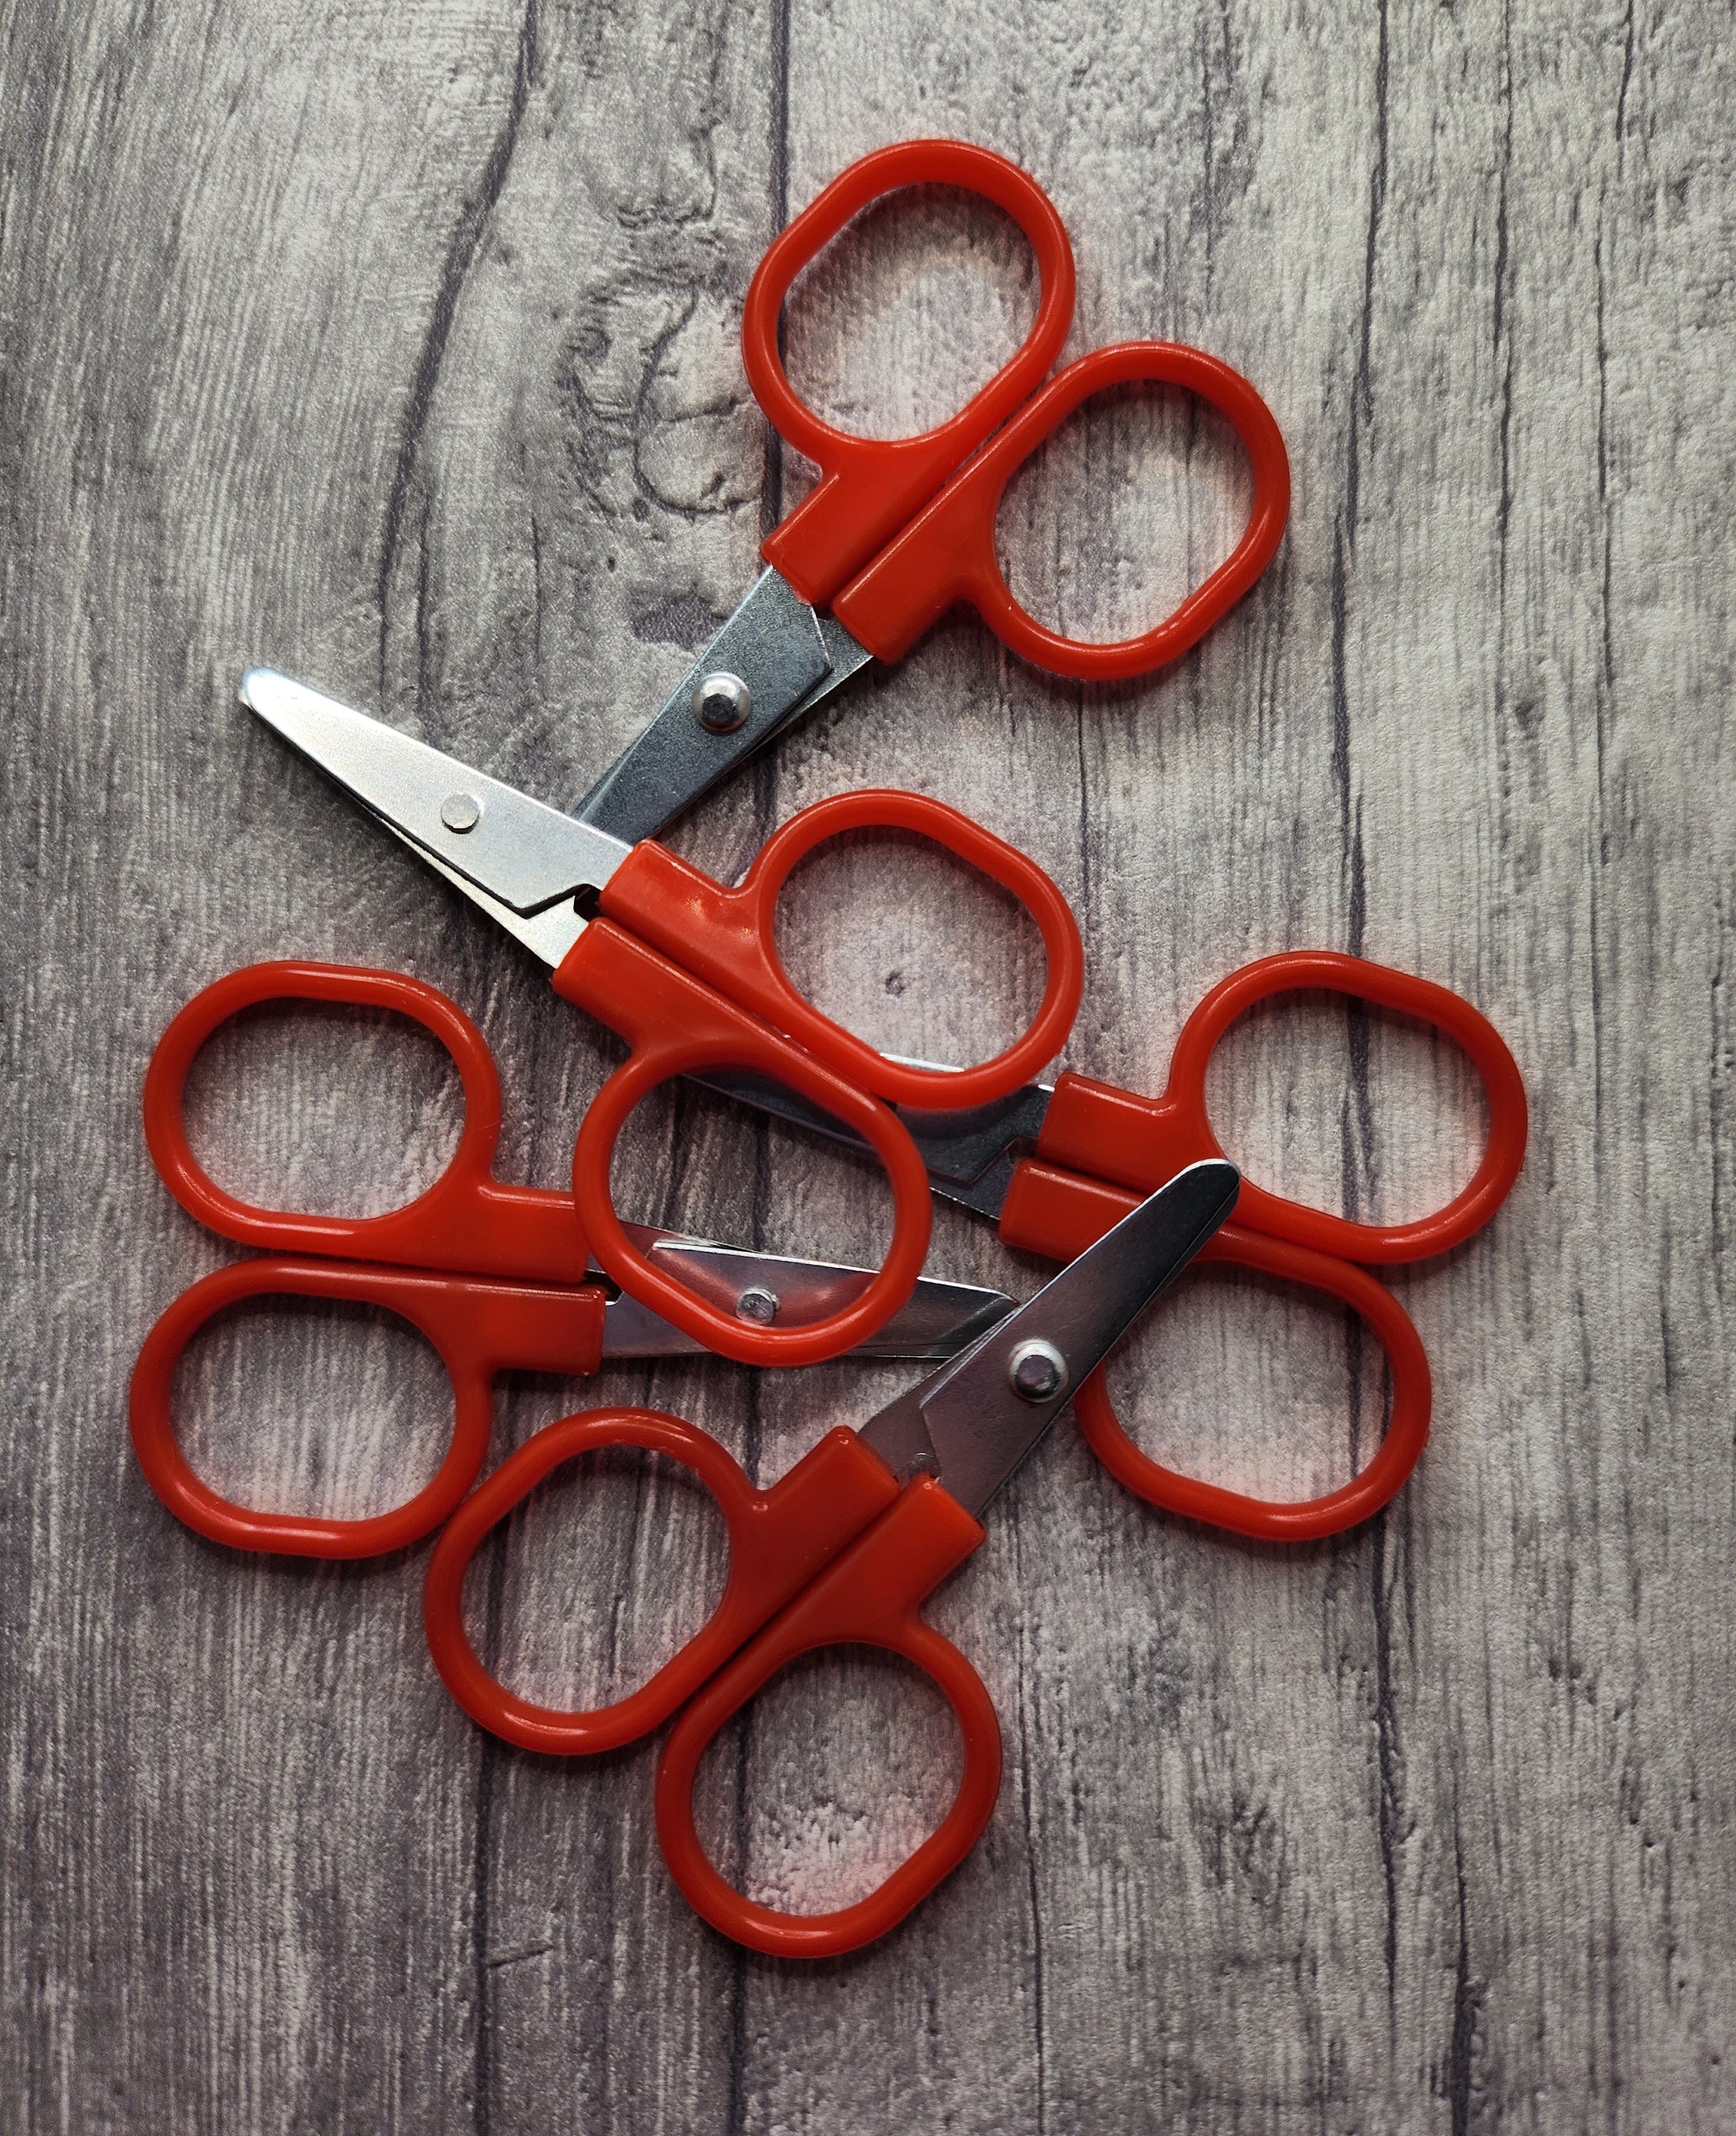 Duckbill Scissors for Trimming the Pile and Edges of Handmade Rugs